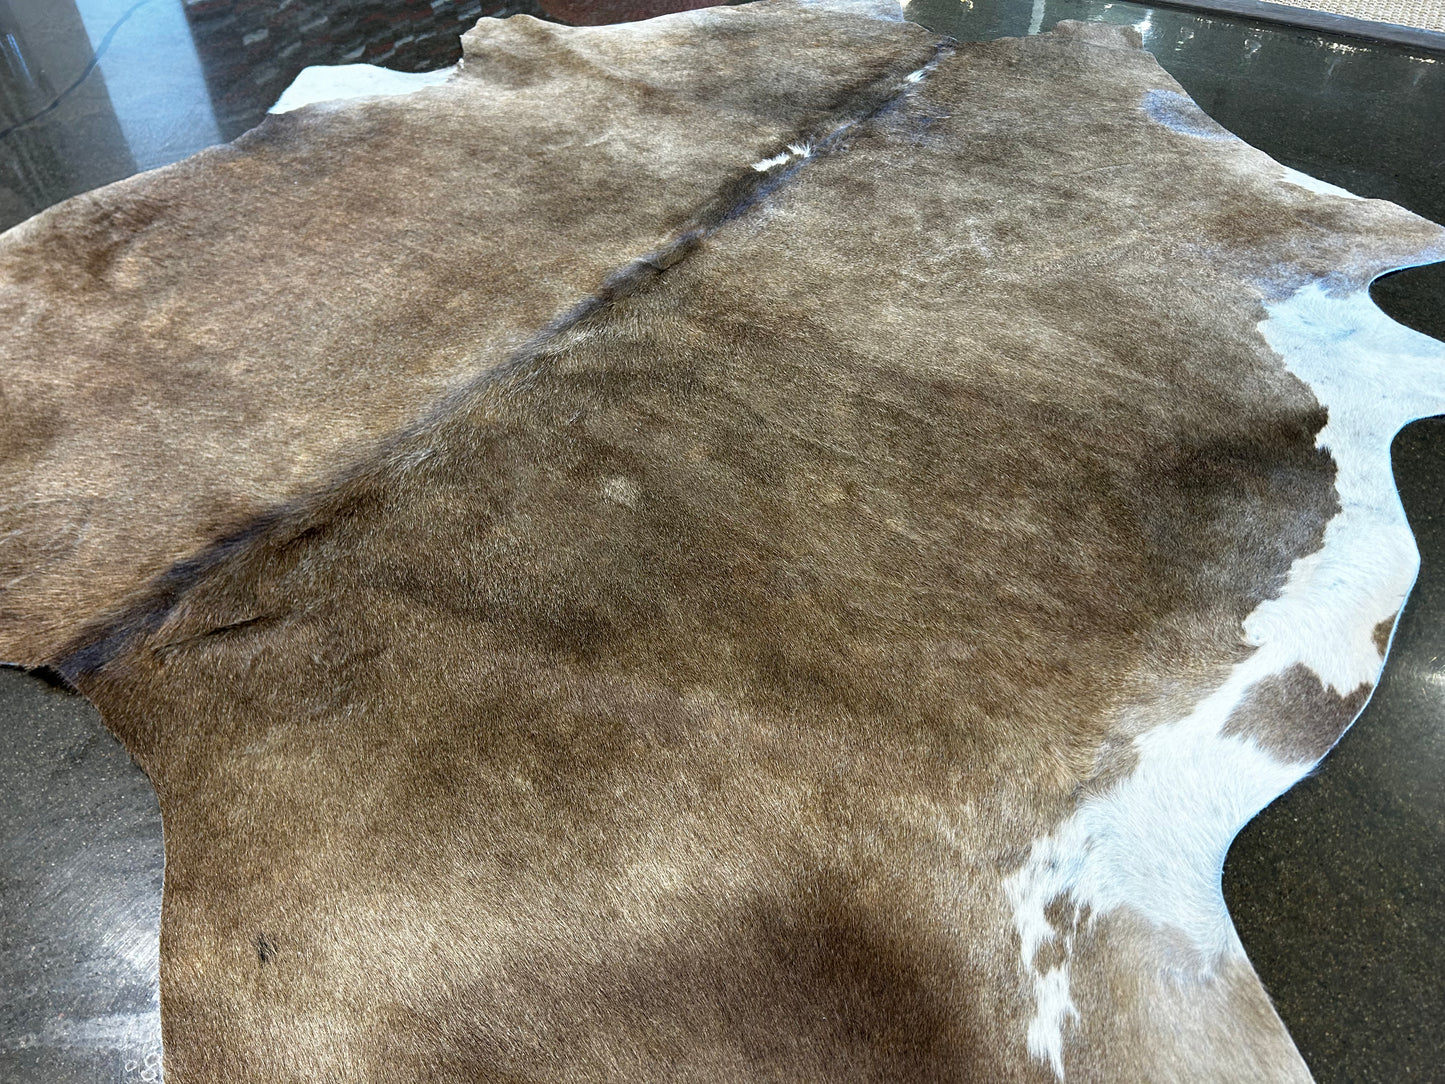 S-4: Cowhide rug - Medium brown and white